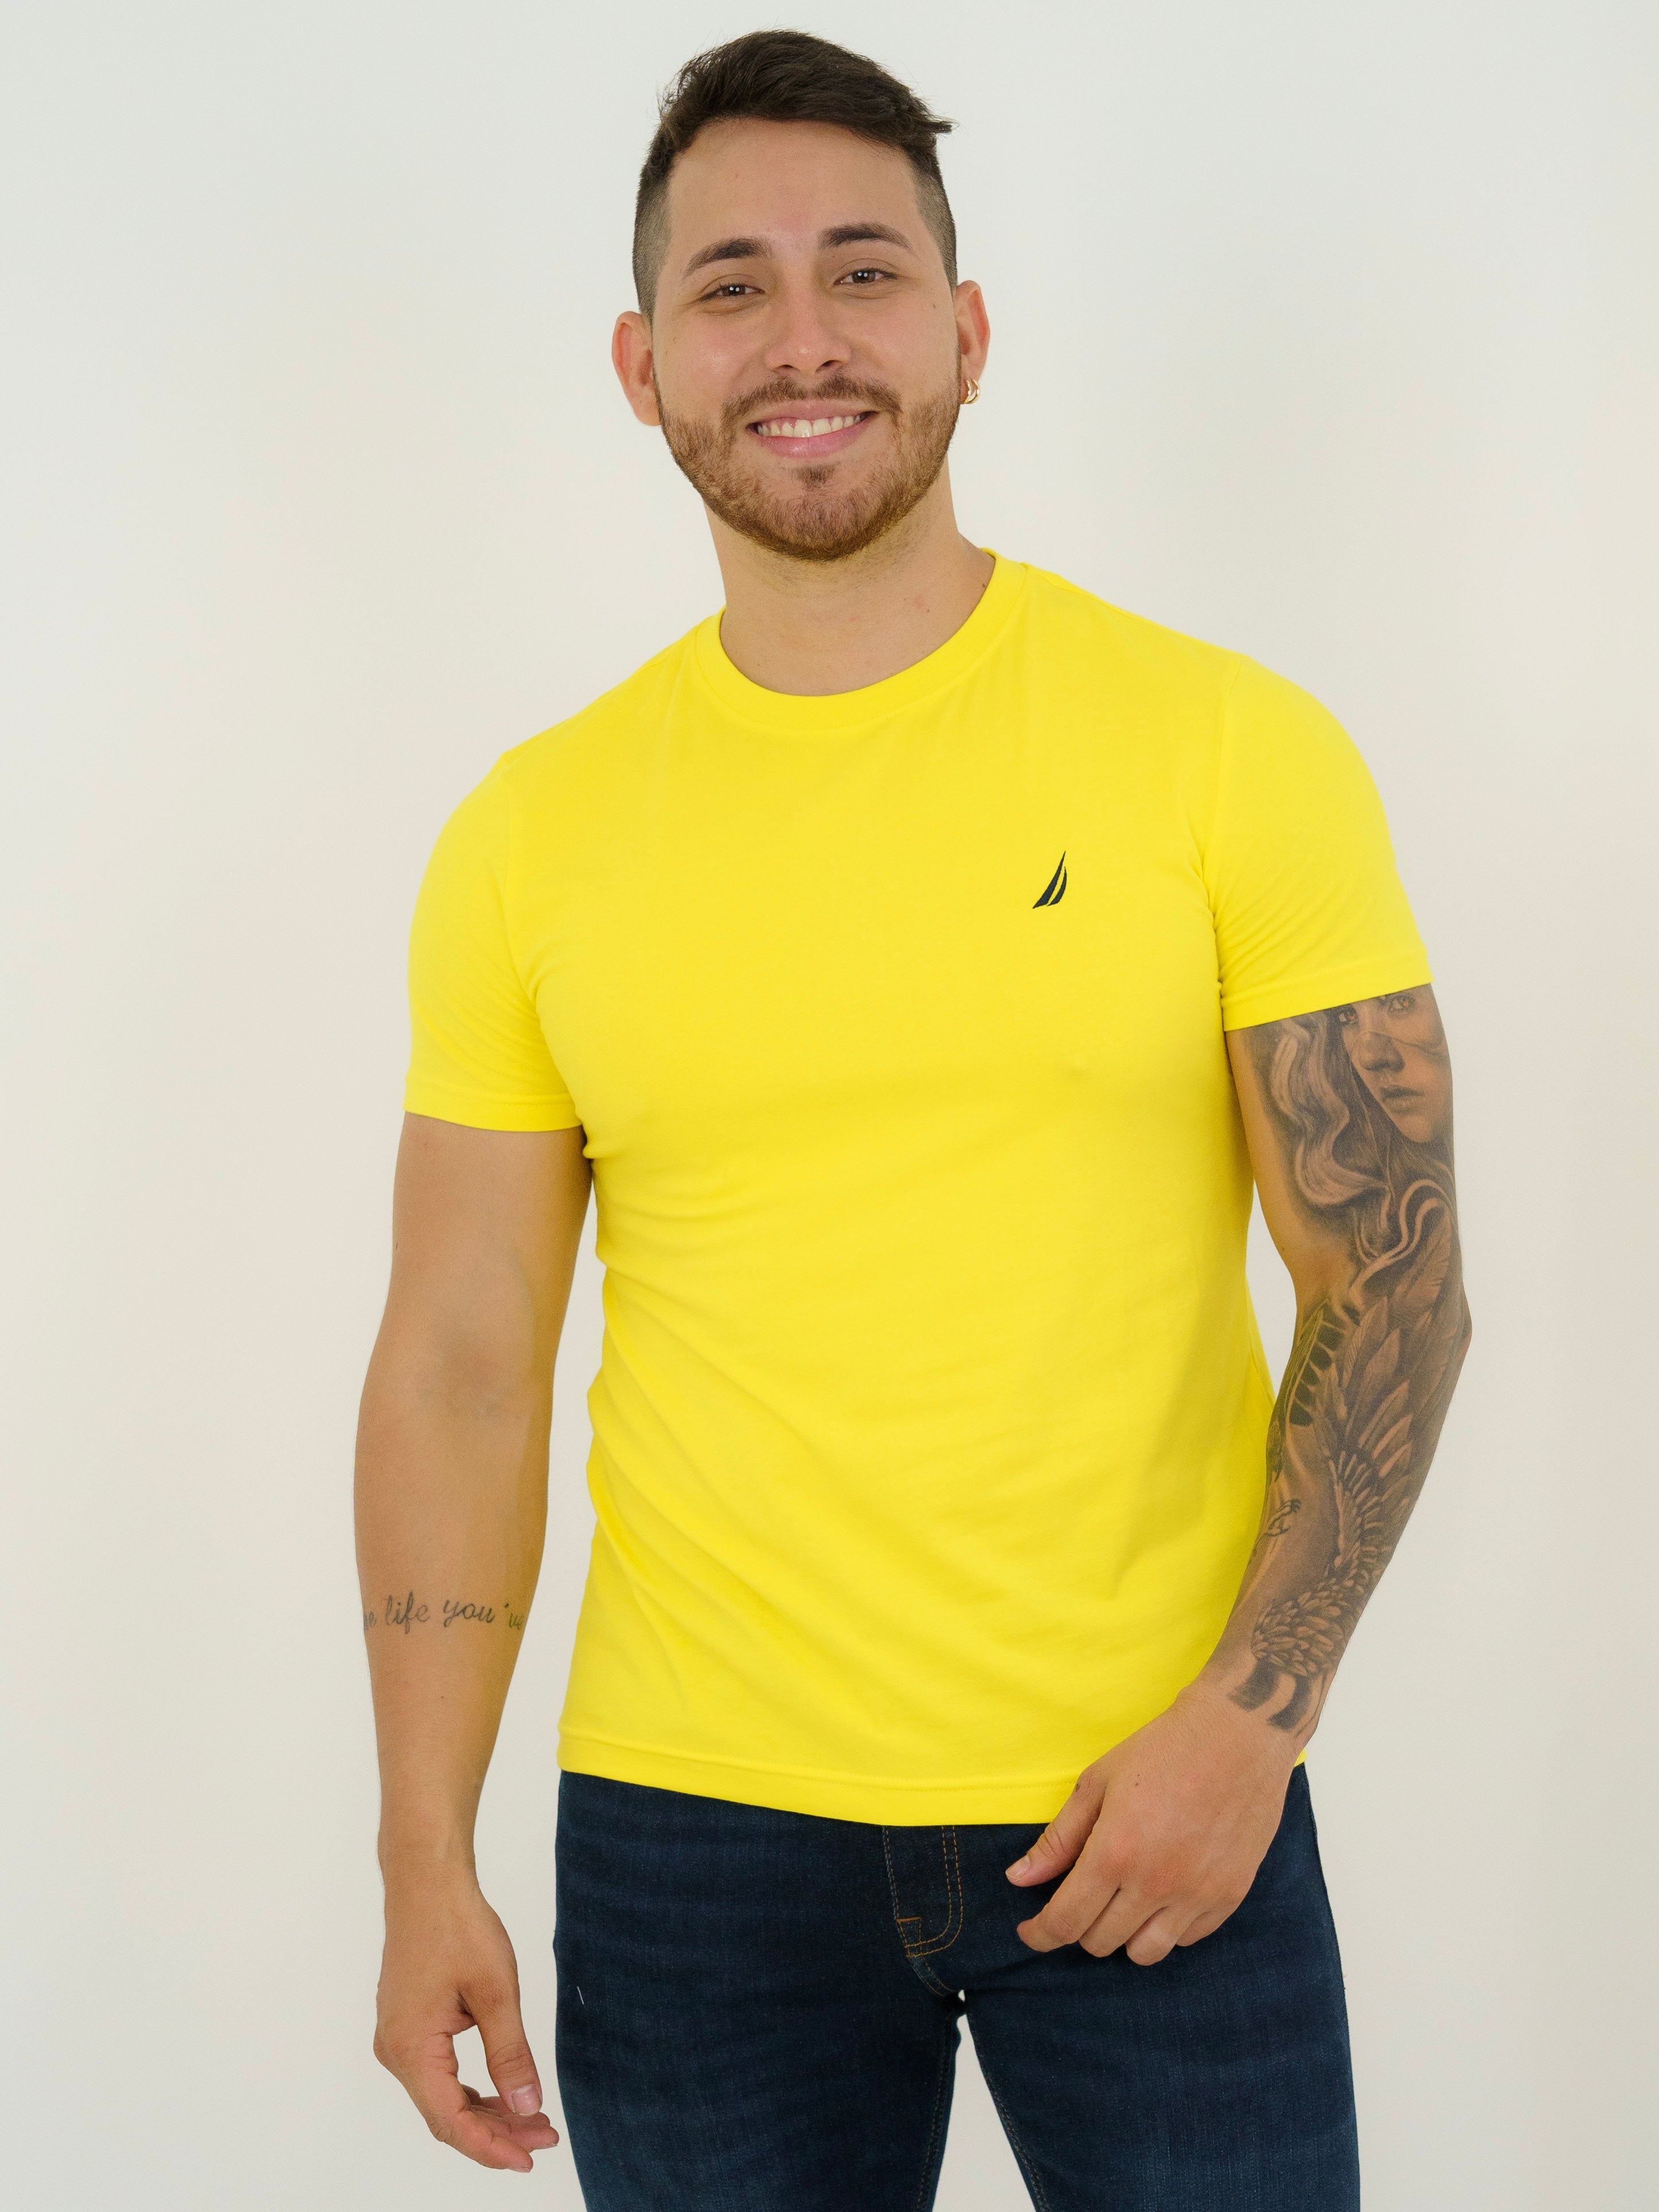 Camiseta Nautica Yellow